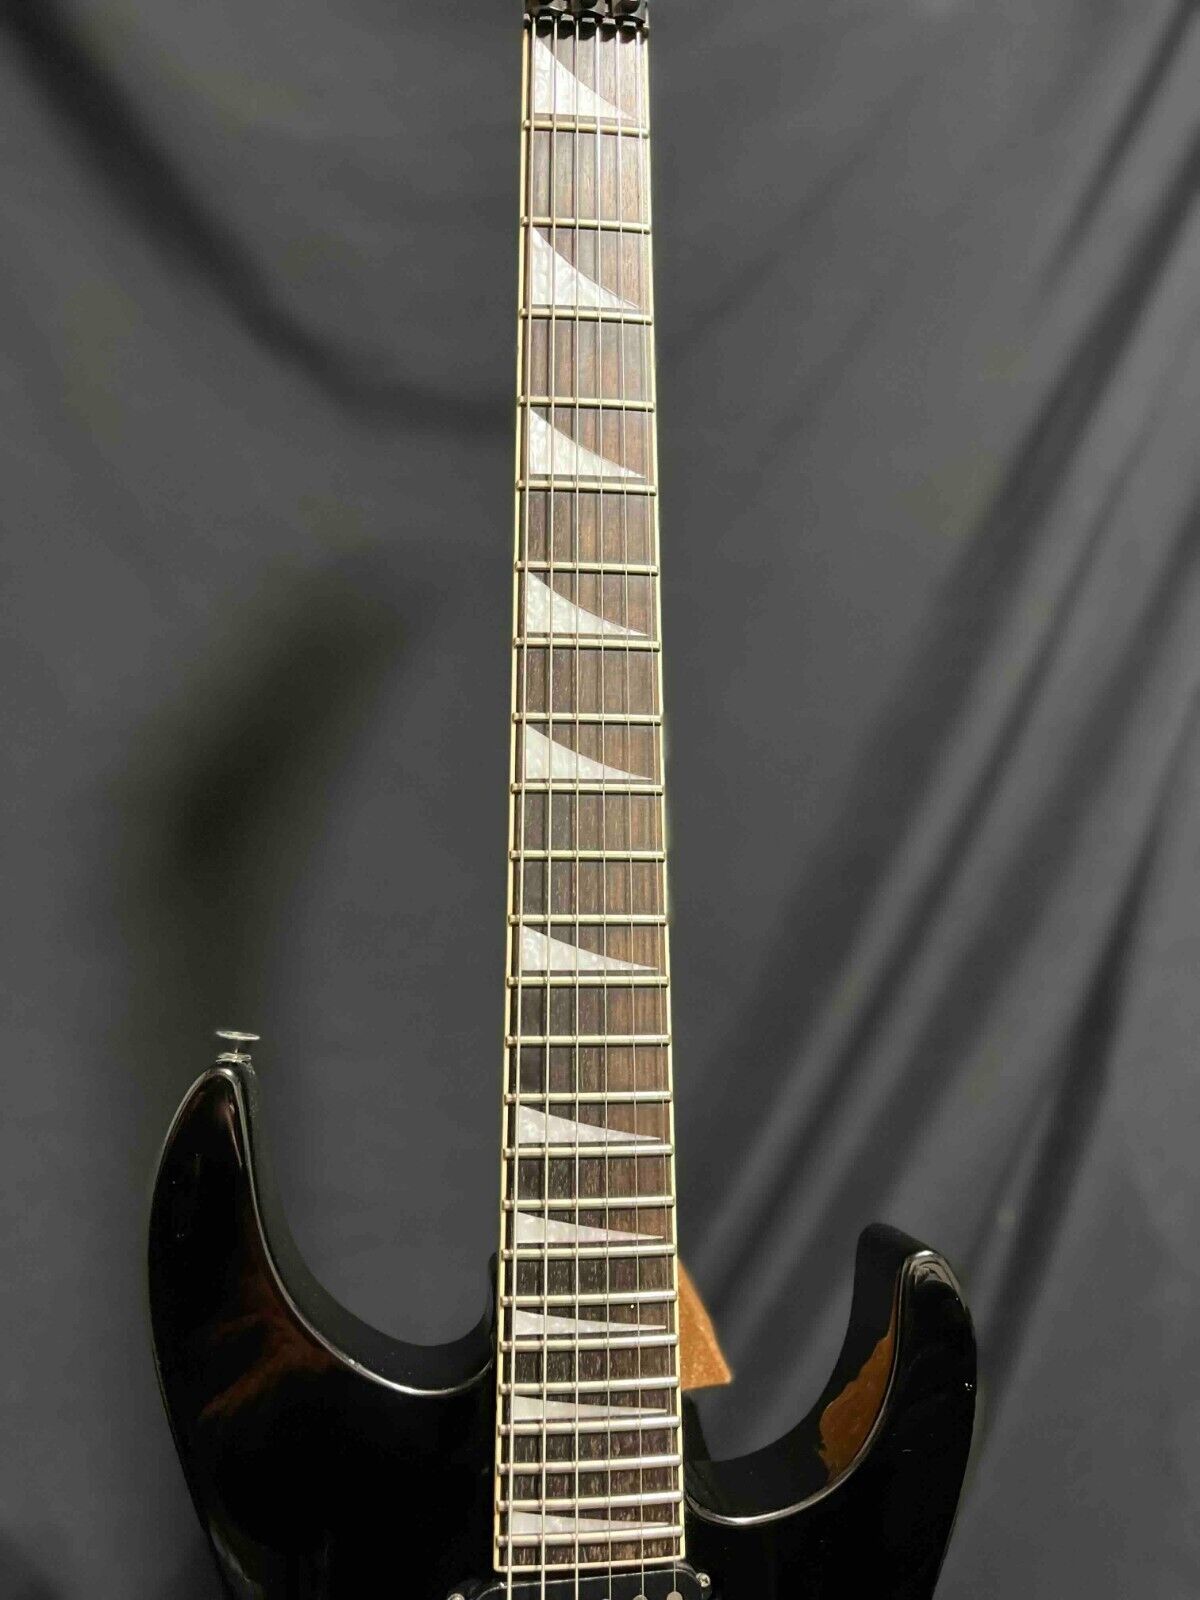 Fernandes STJ-75 1980s - Black Made in Japan Dinky Type Electric guitar w/case